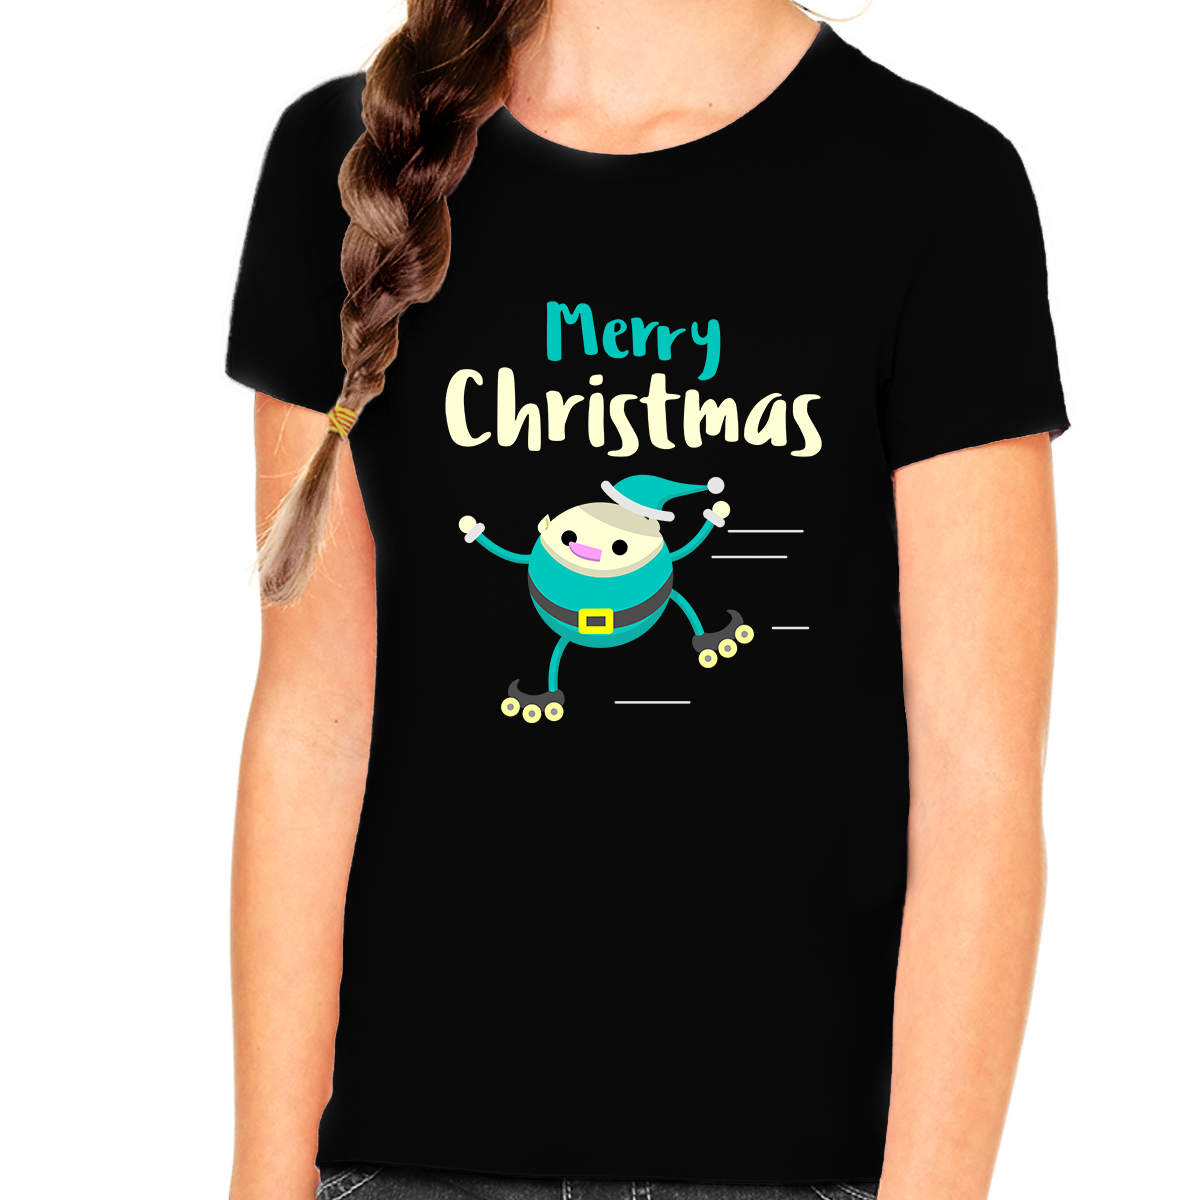 Funny Elf Christmas T Shirts for Girls Christmas TShirts for Girls Christmas Shirt Funny Christmas Shirts